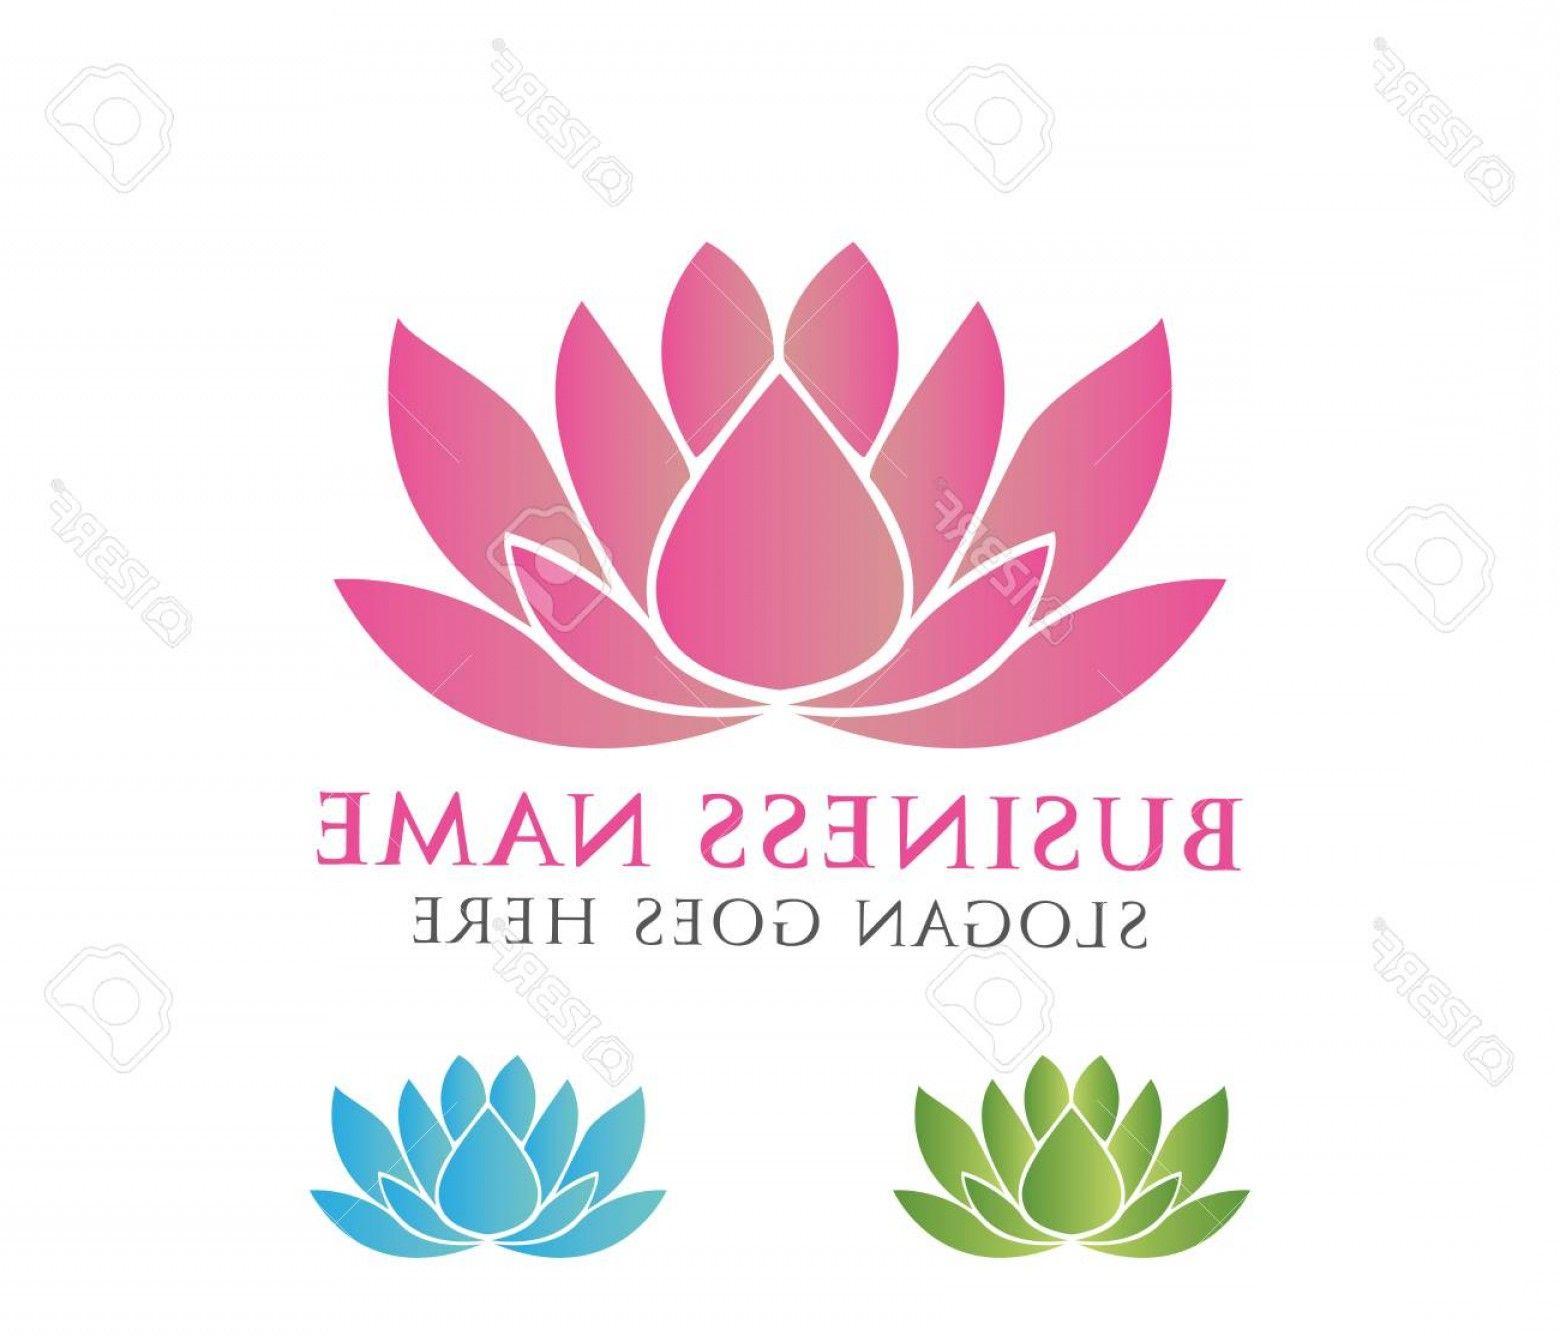 Lotus Flower Vector Art Logo - Lotus Flower Vector Art Logo | SHOPATCLOTH